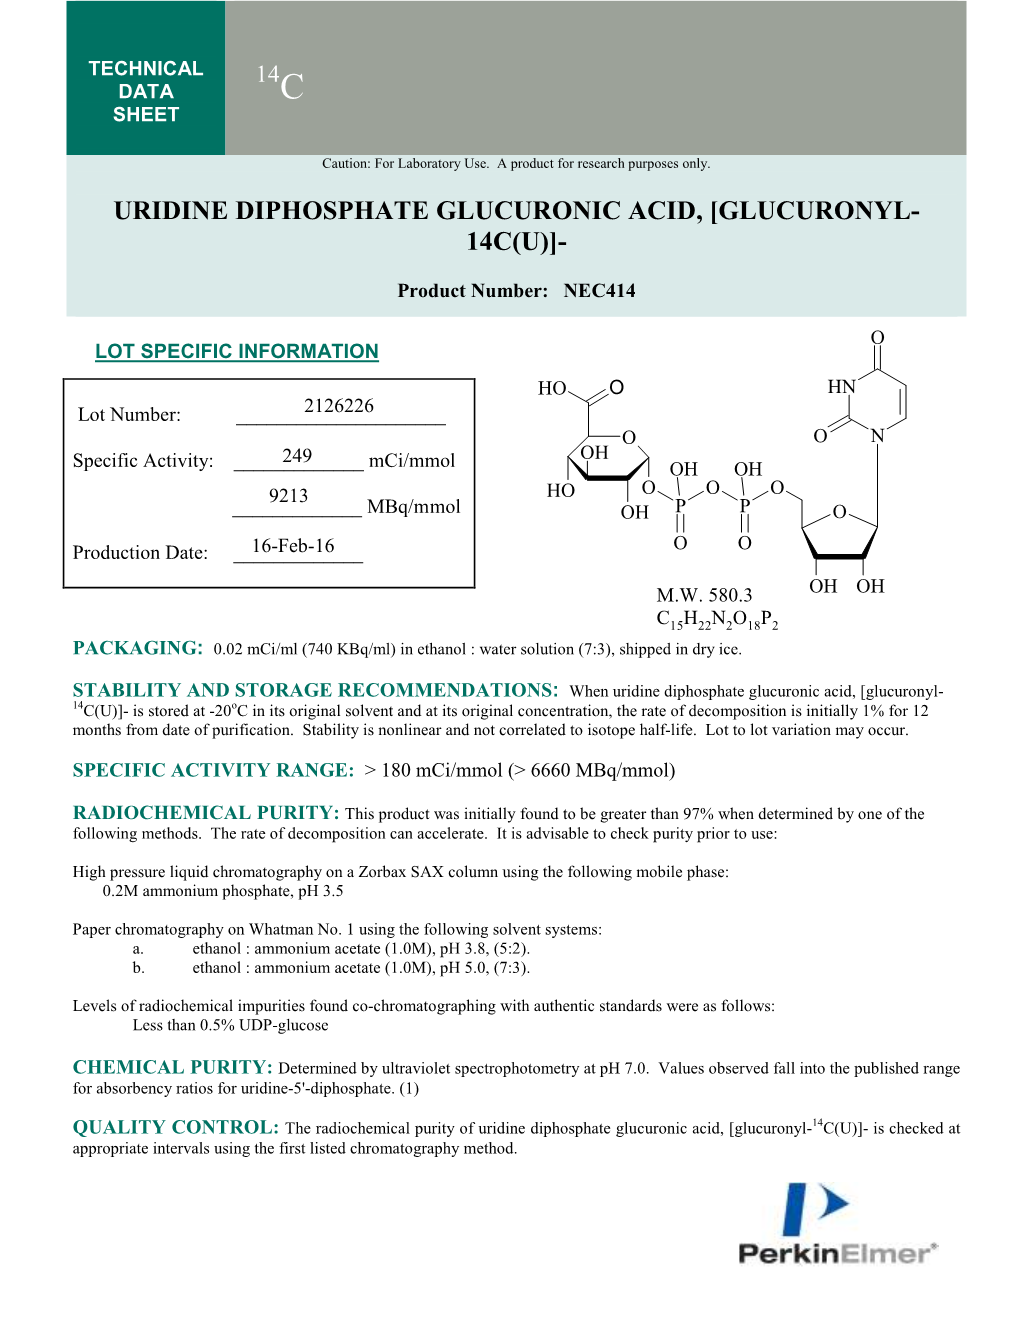 Uridine Diphosphate Glucuronic Acid, [Glucuronyl- 14C(U)]